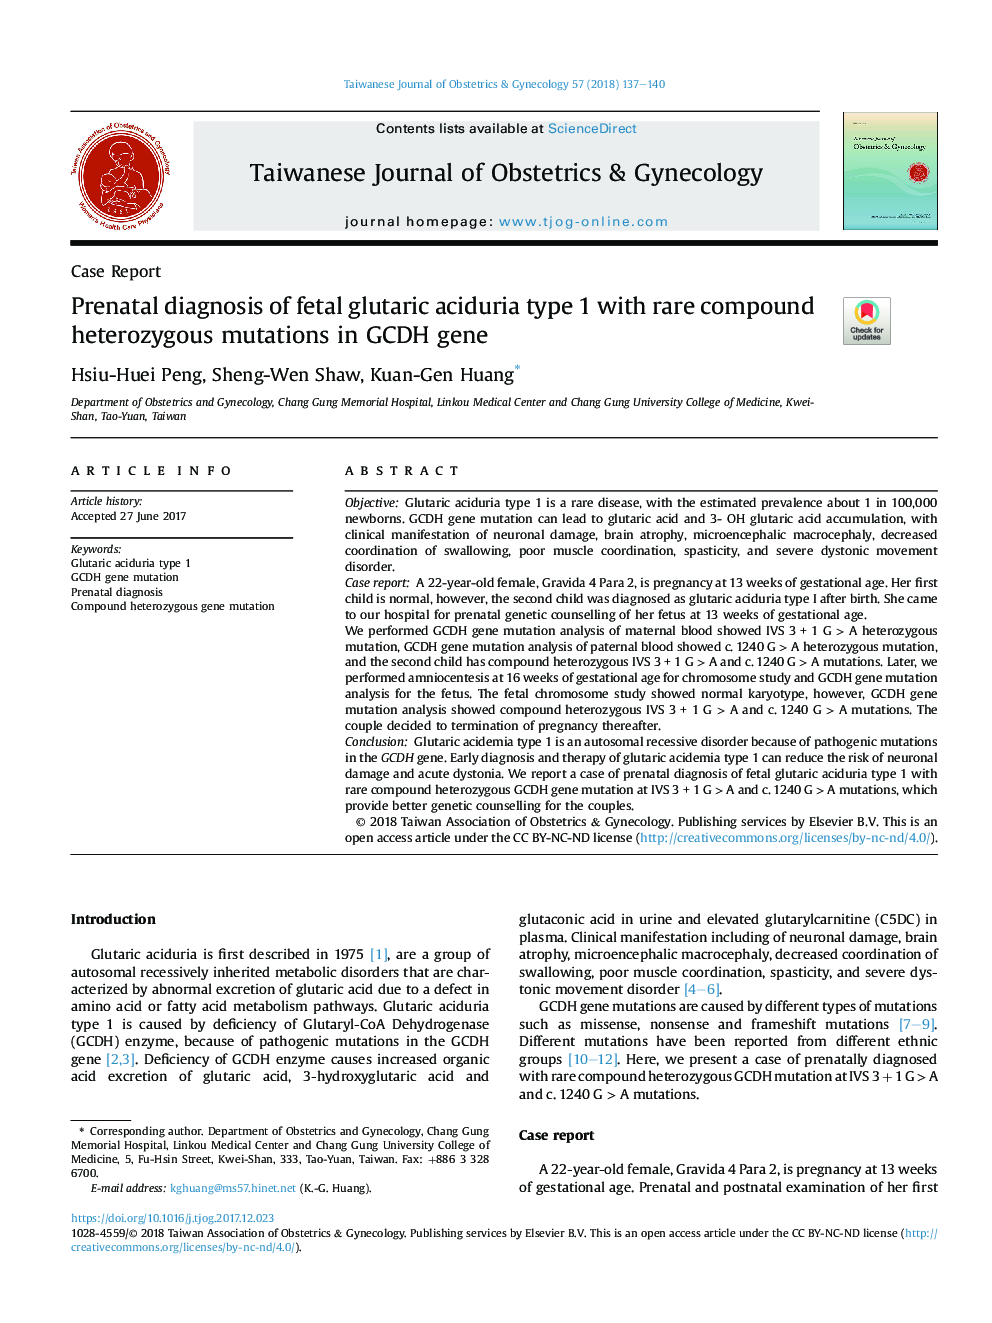 Prenatal diagnosis of fetal glutaric aciduria type 1 with rare compound heterozygous mutations in GCDH gene